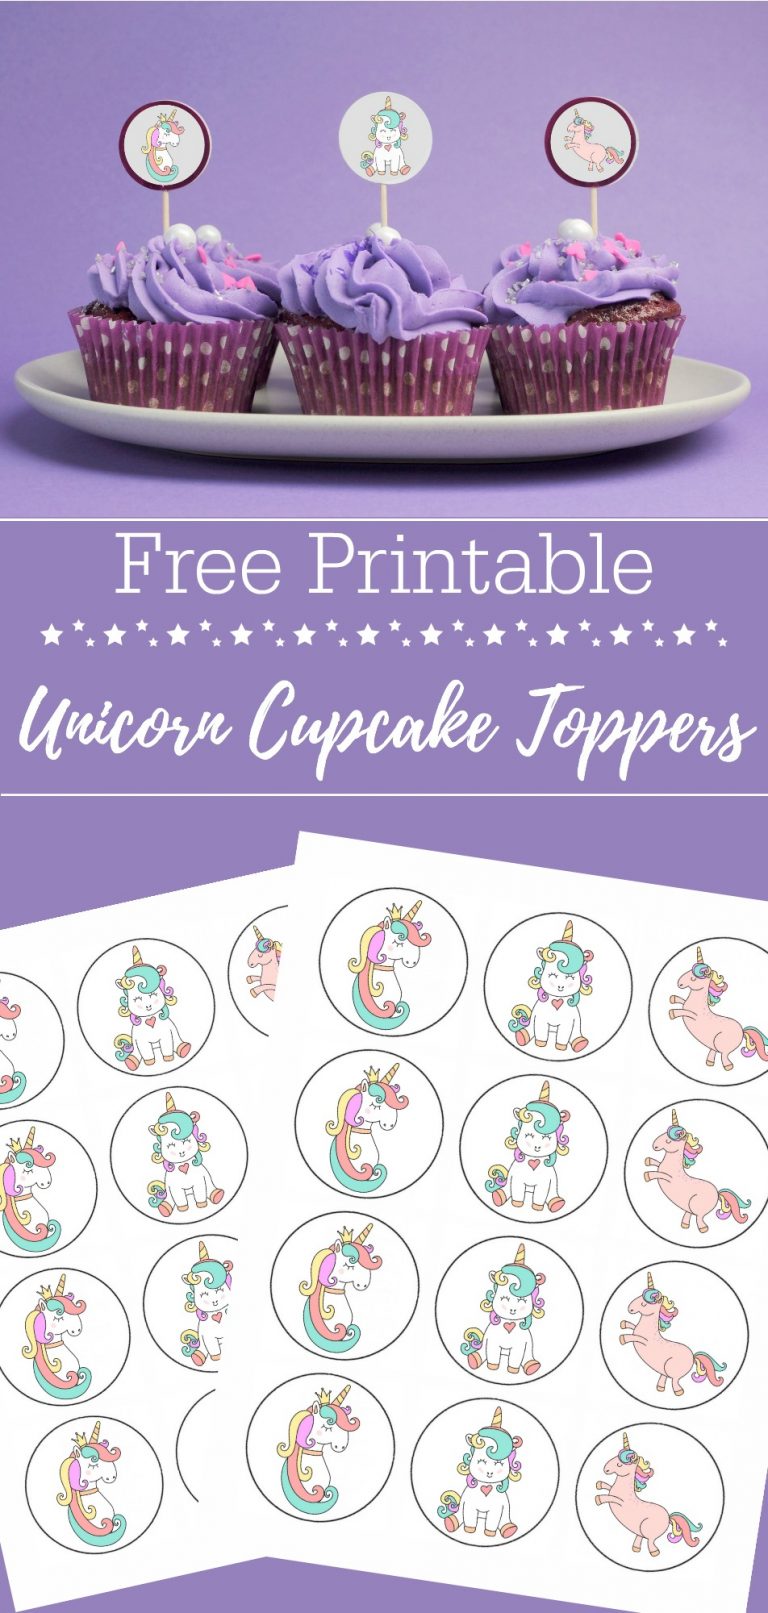 Free Printable Unicorn Cupcake Toppers